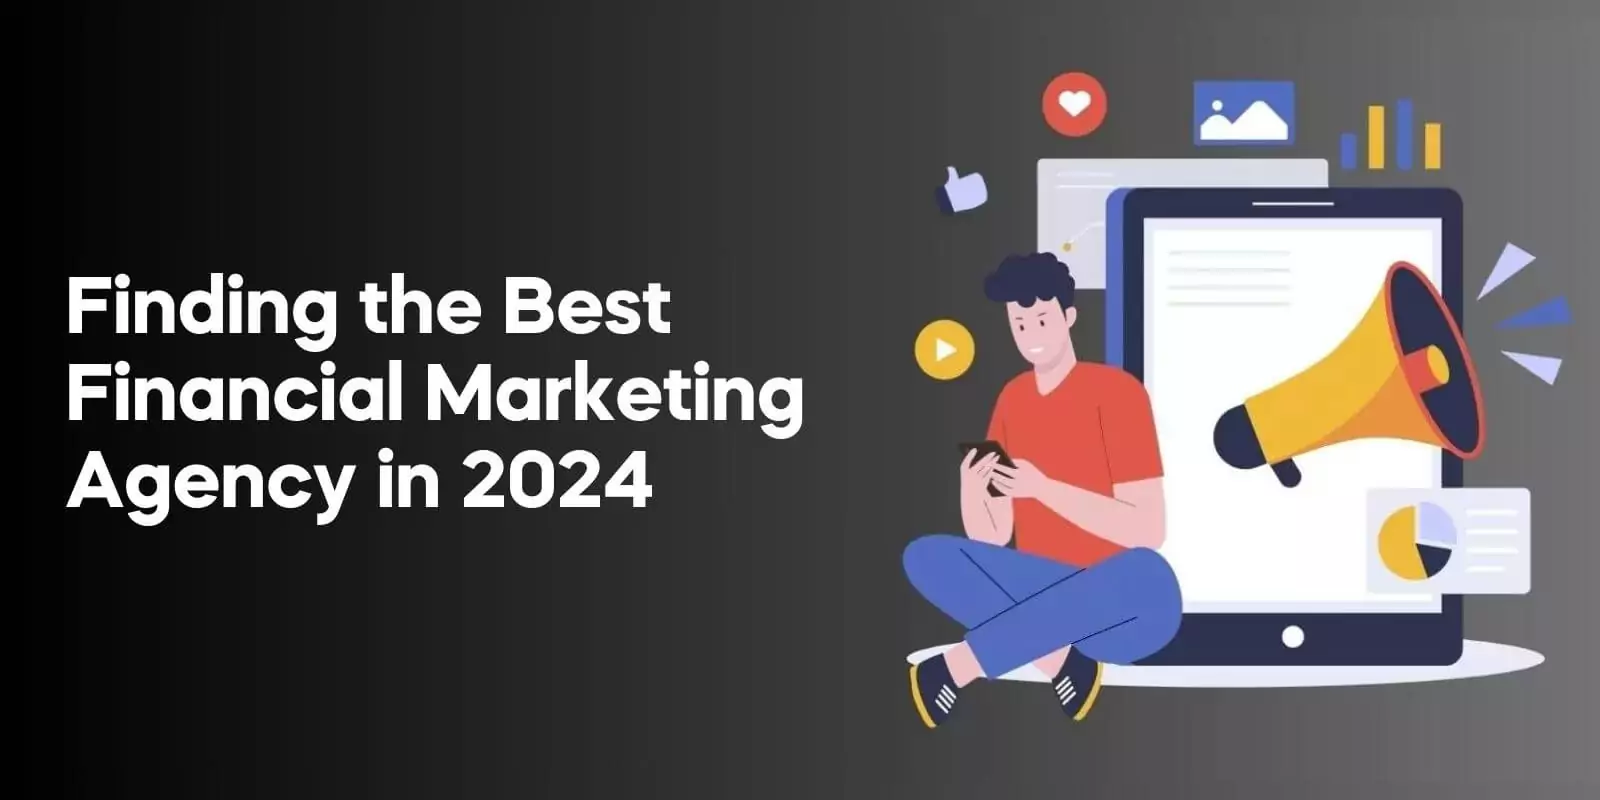 Finding the Best Financial Marketing Agency in 2024